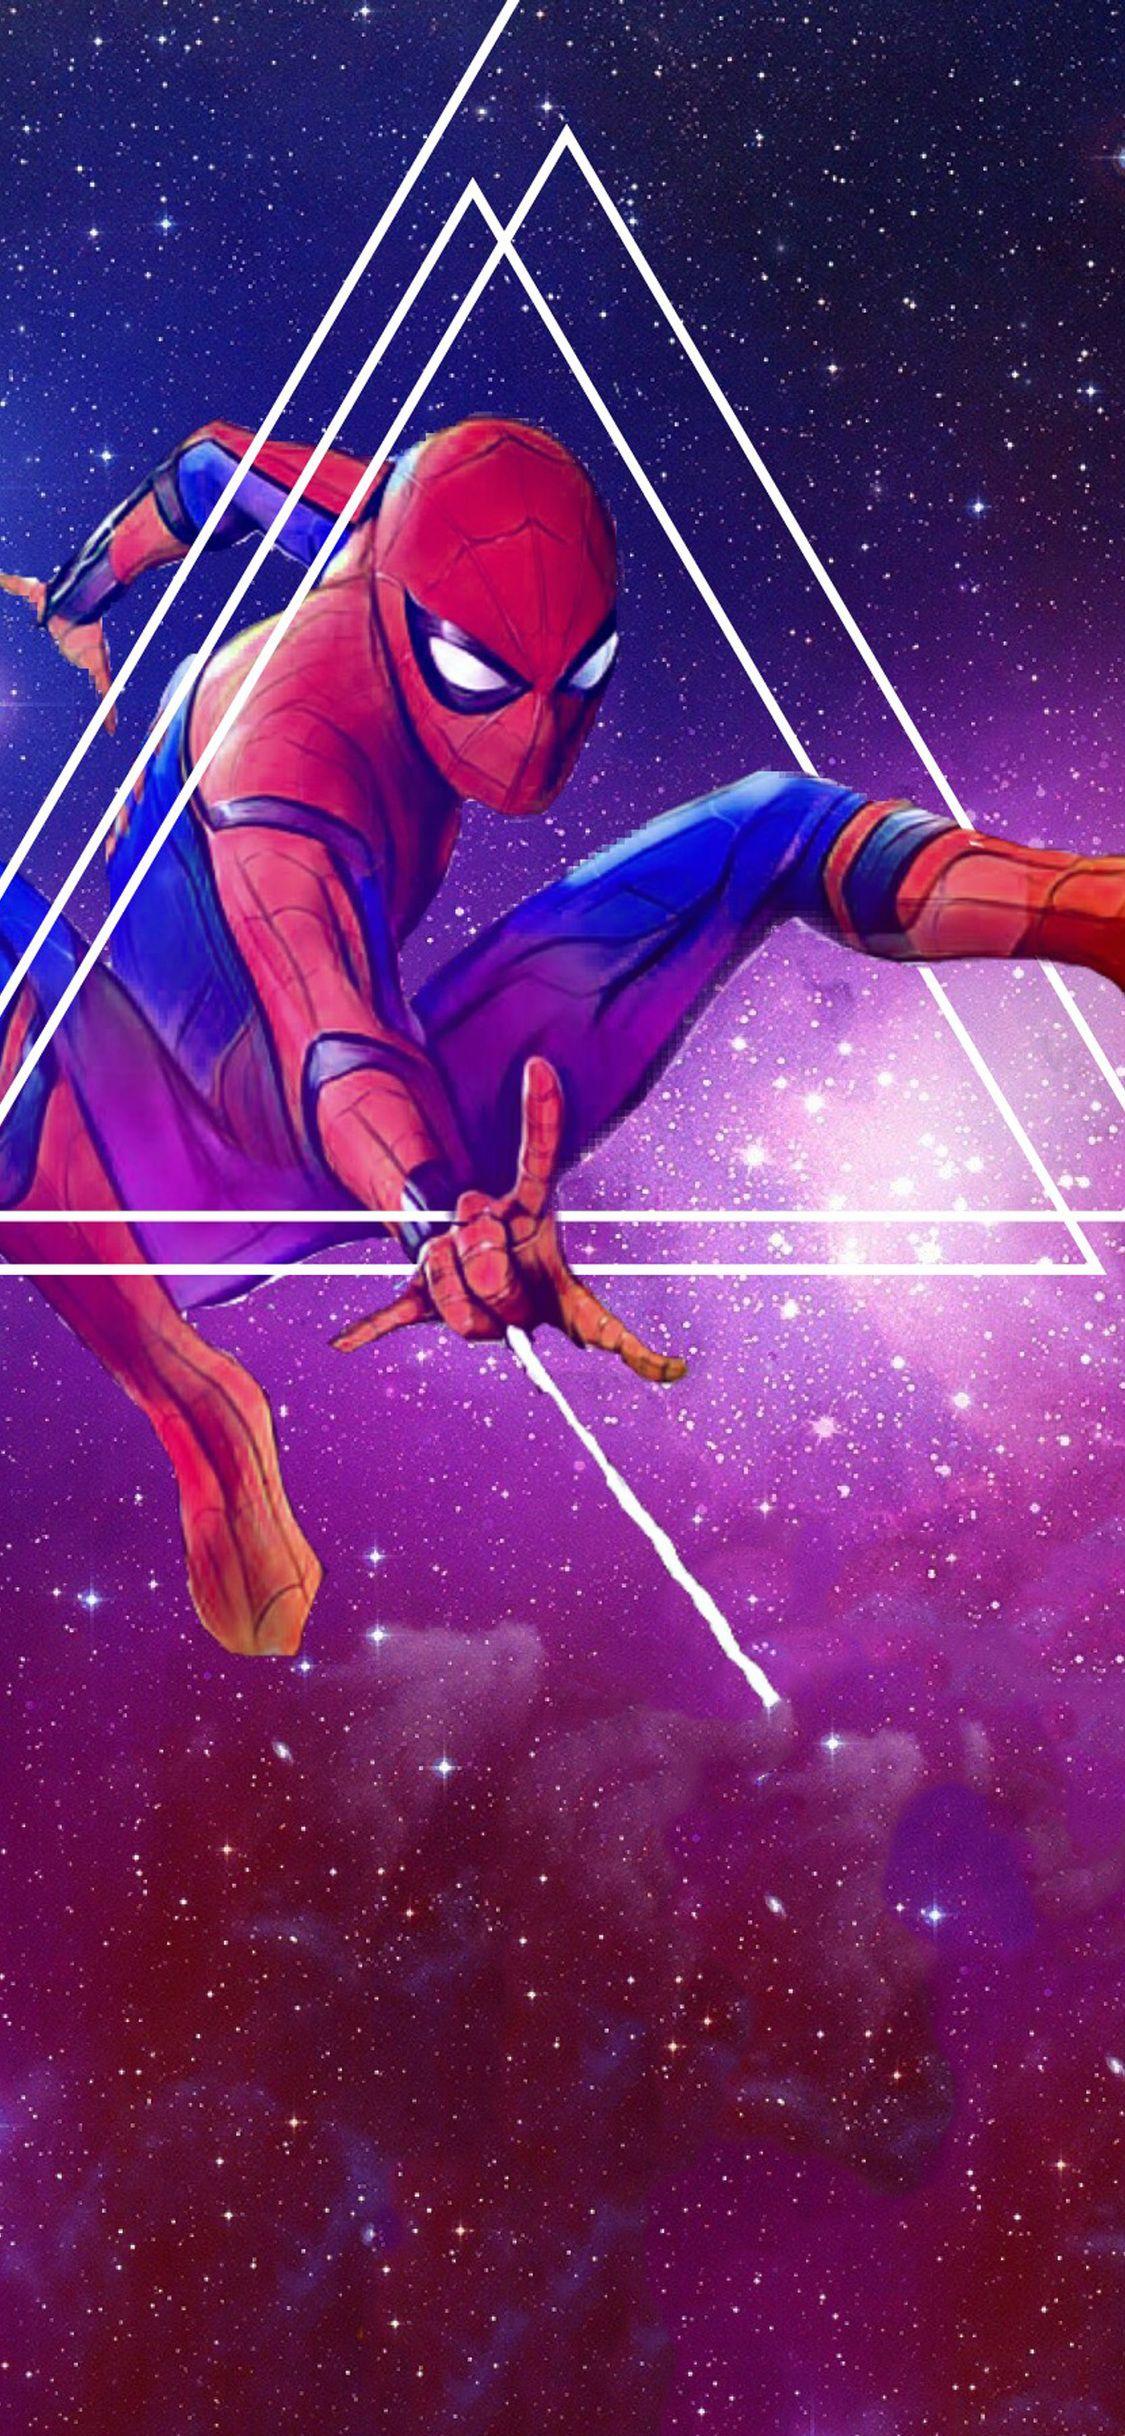 Spiderman Avengers Infinity War Artwork iPhone X, iPhone 10